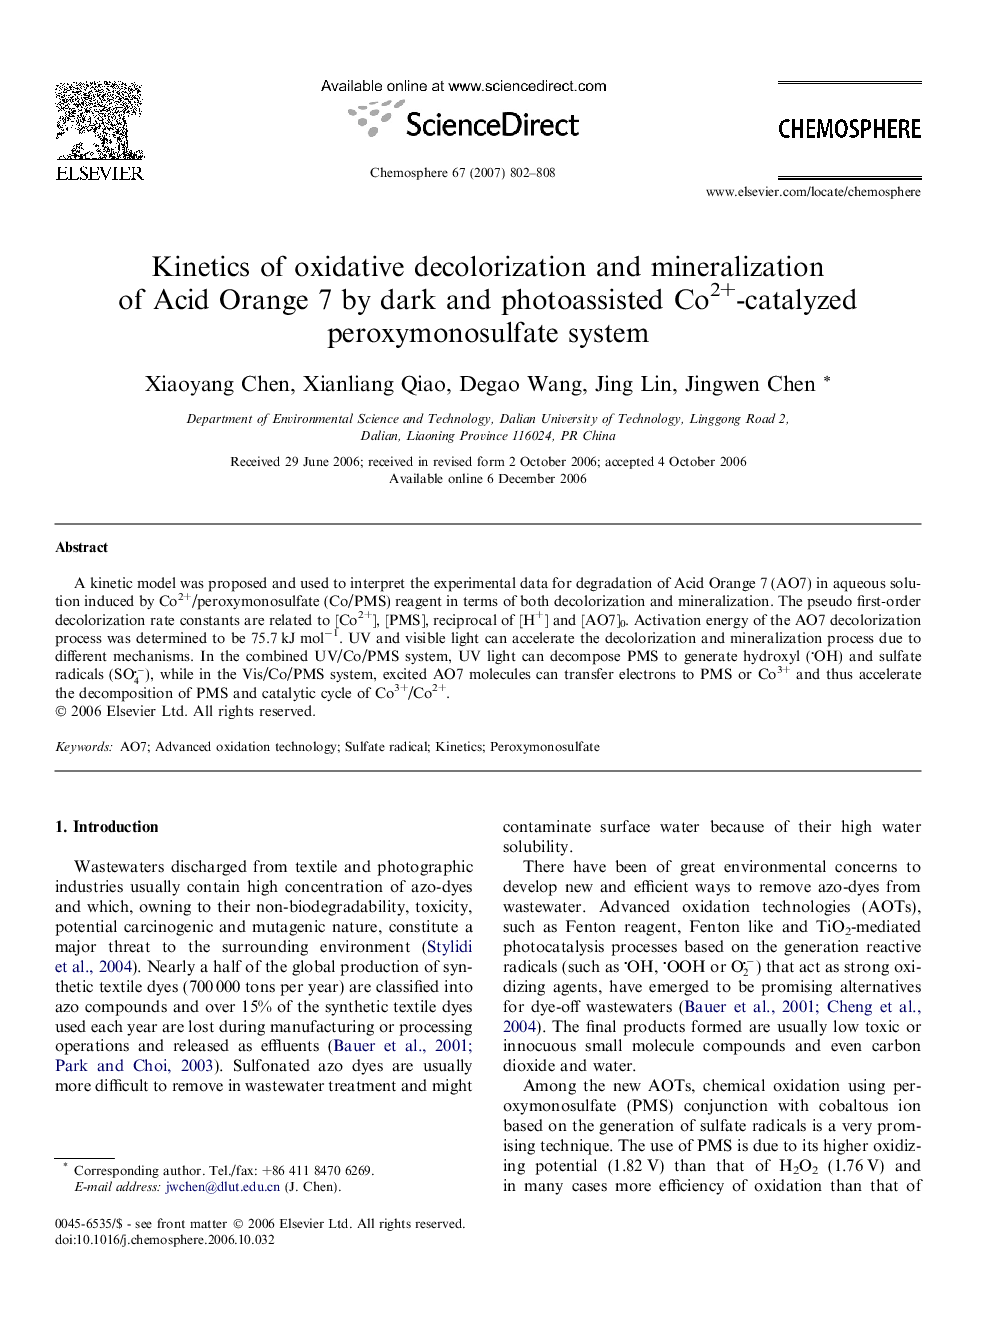 Kinetics of oxidative decolorization and mineralization of Acid Orange 7 by dark and photoassisted Co2+-catalyzed peroxymonosulfate system